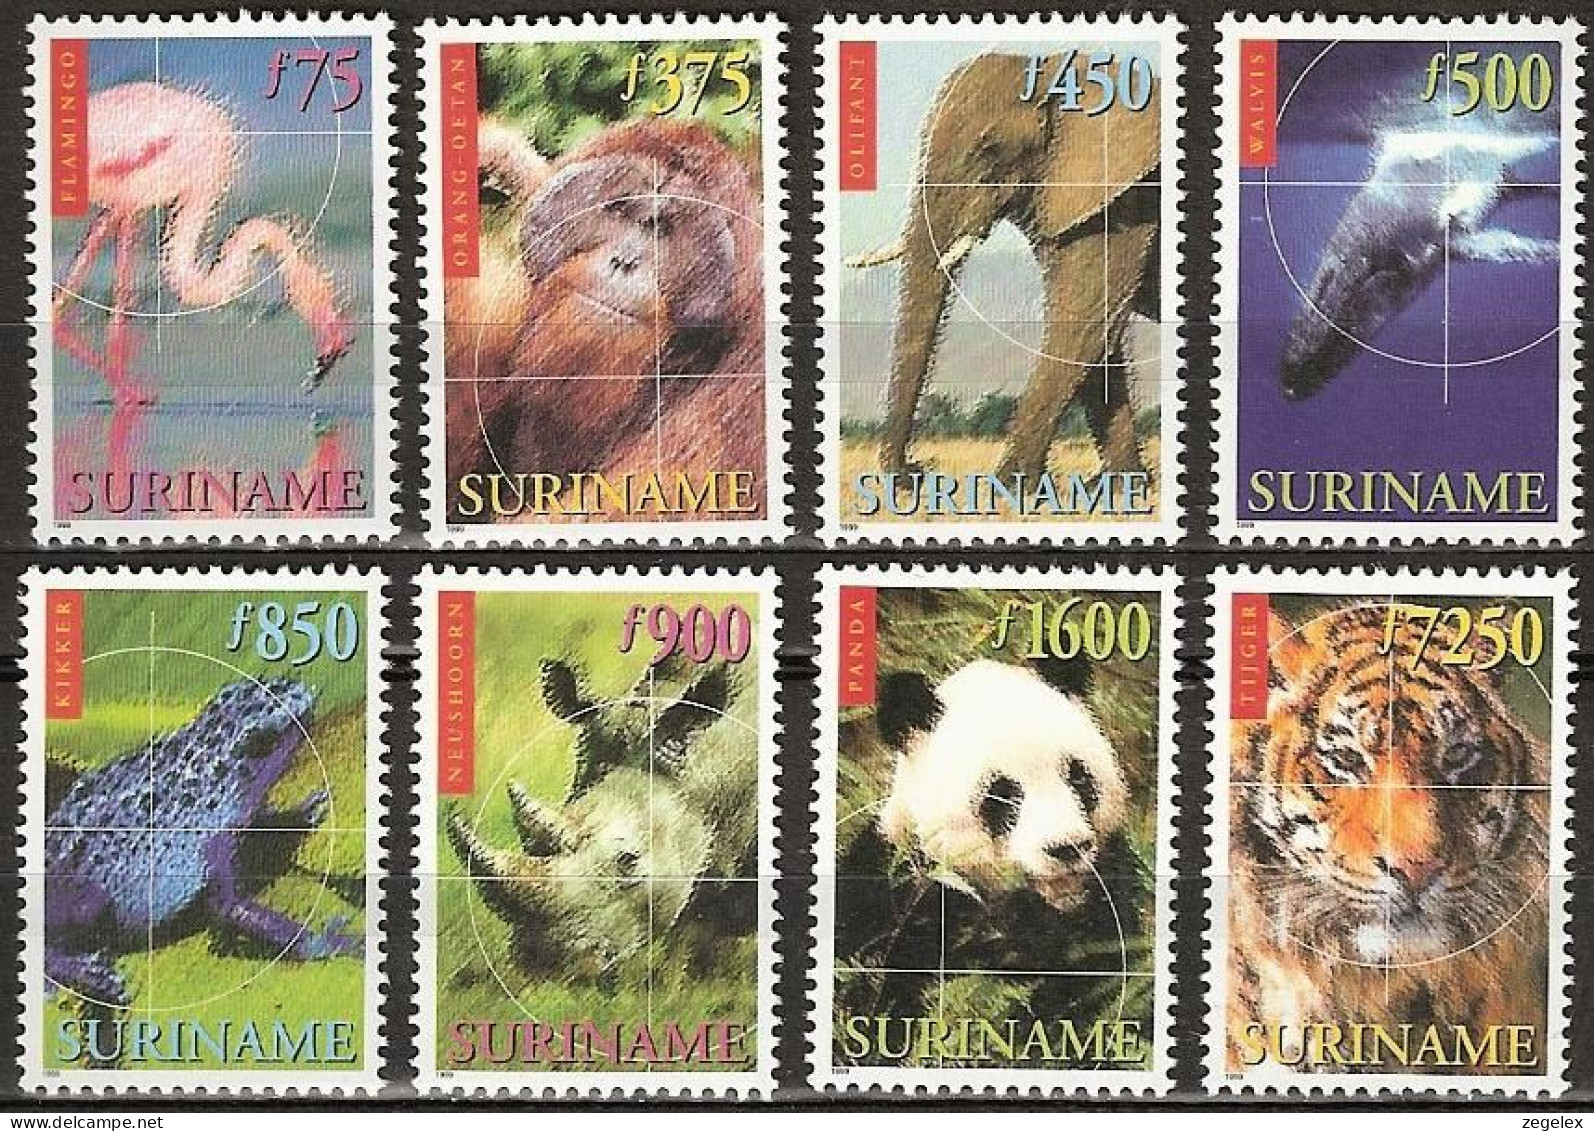 Suriname 1999 Dieren, Tijger, Aap Olifant, Kikker, MNH**,animals, Tiger, Flamingo, Monkey, Elephant, Panda - Surinam